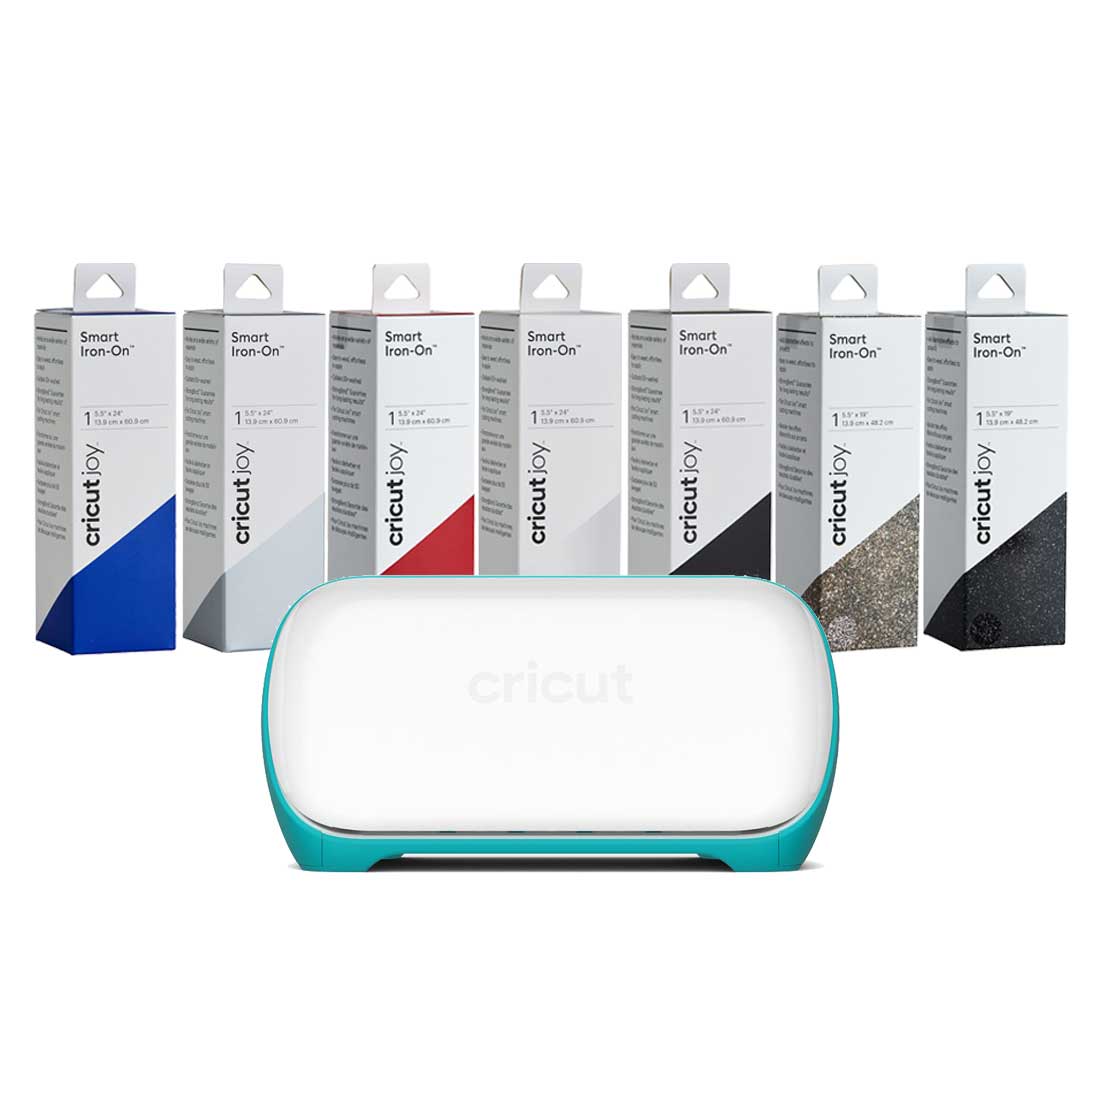 Cricut Joy + Smart Iron On Bundle